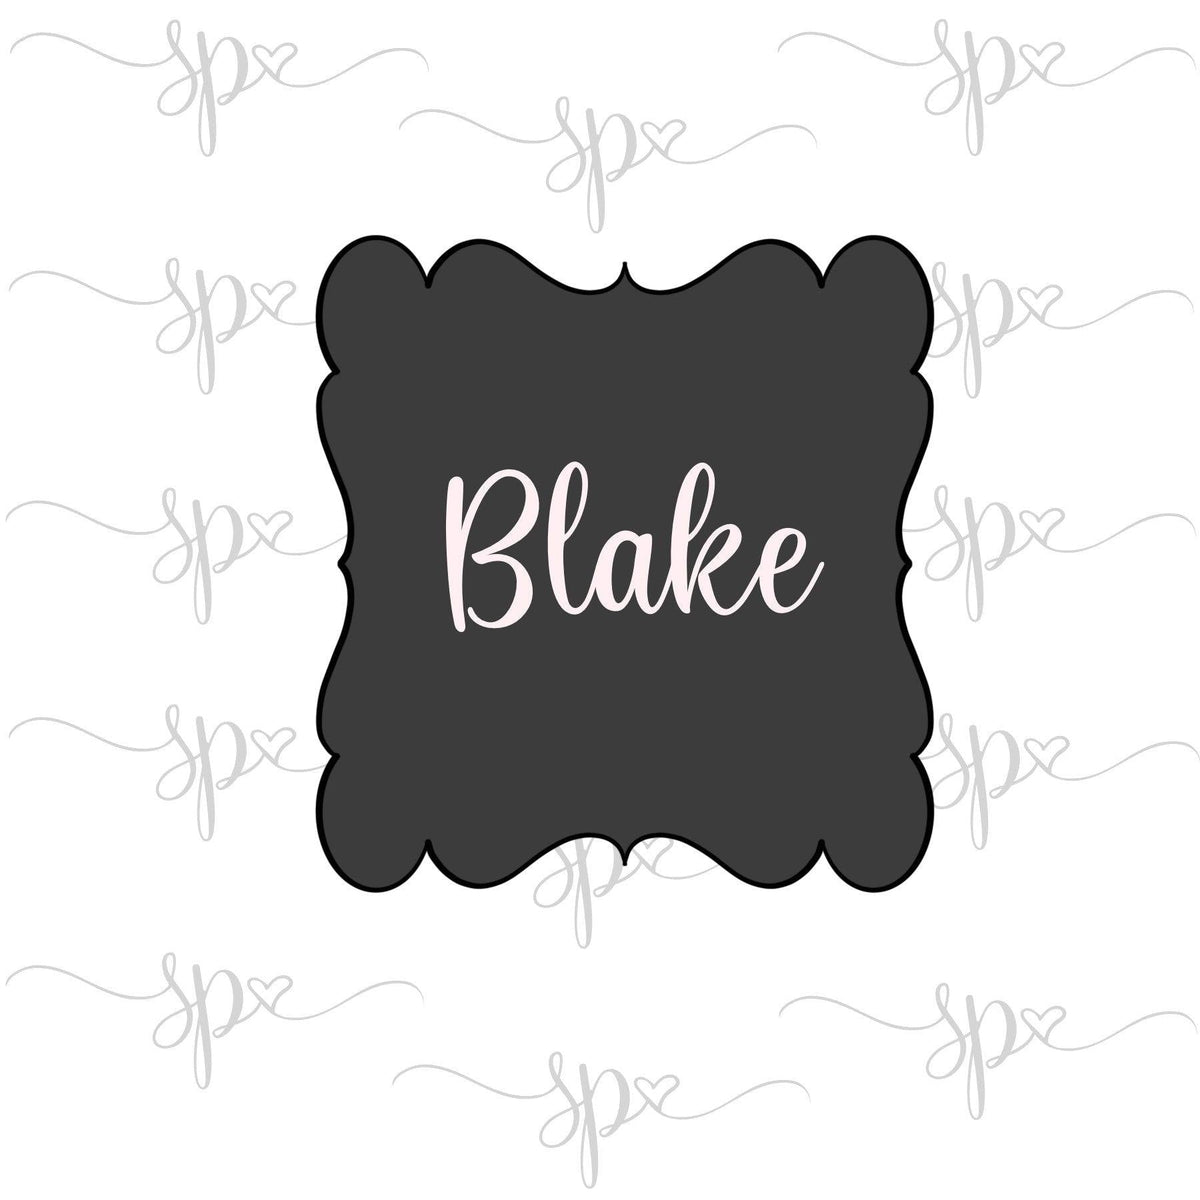 Blake Plaque Cookie Cutter - Sweetleigh 